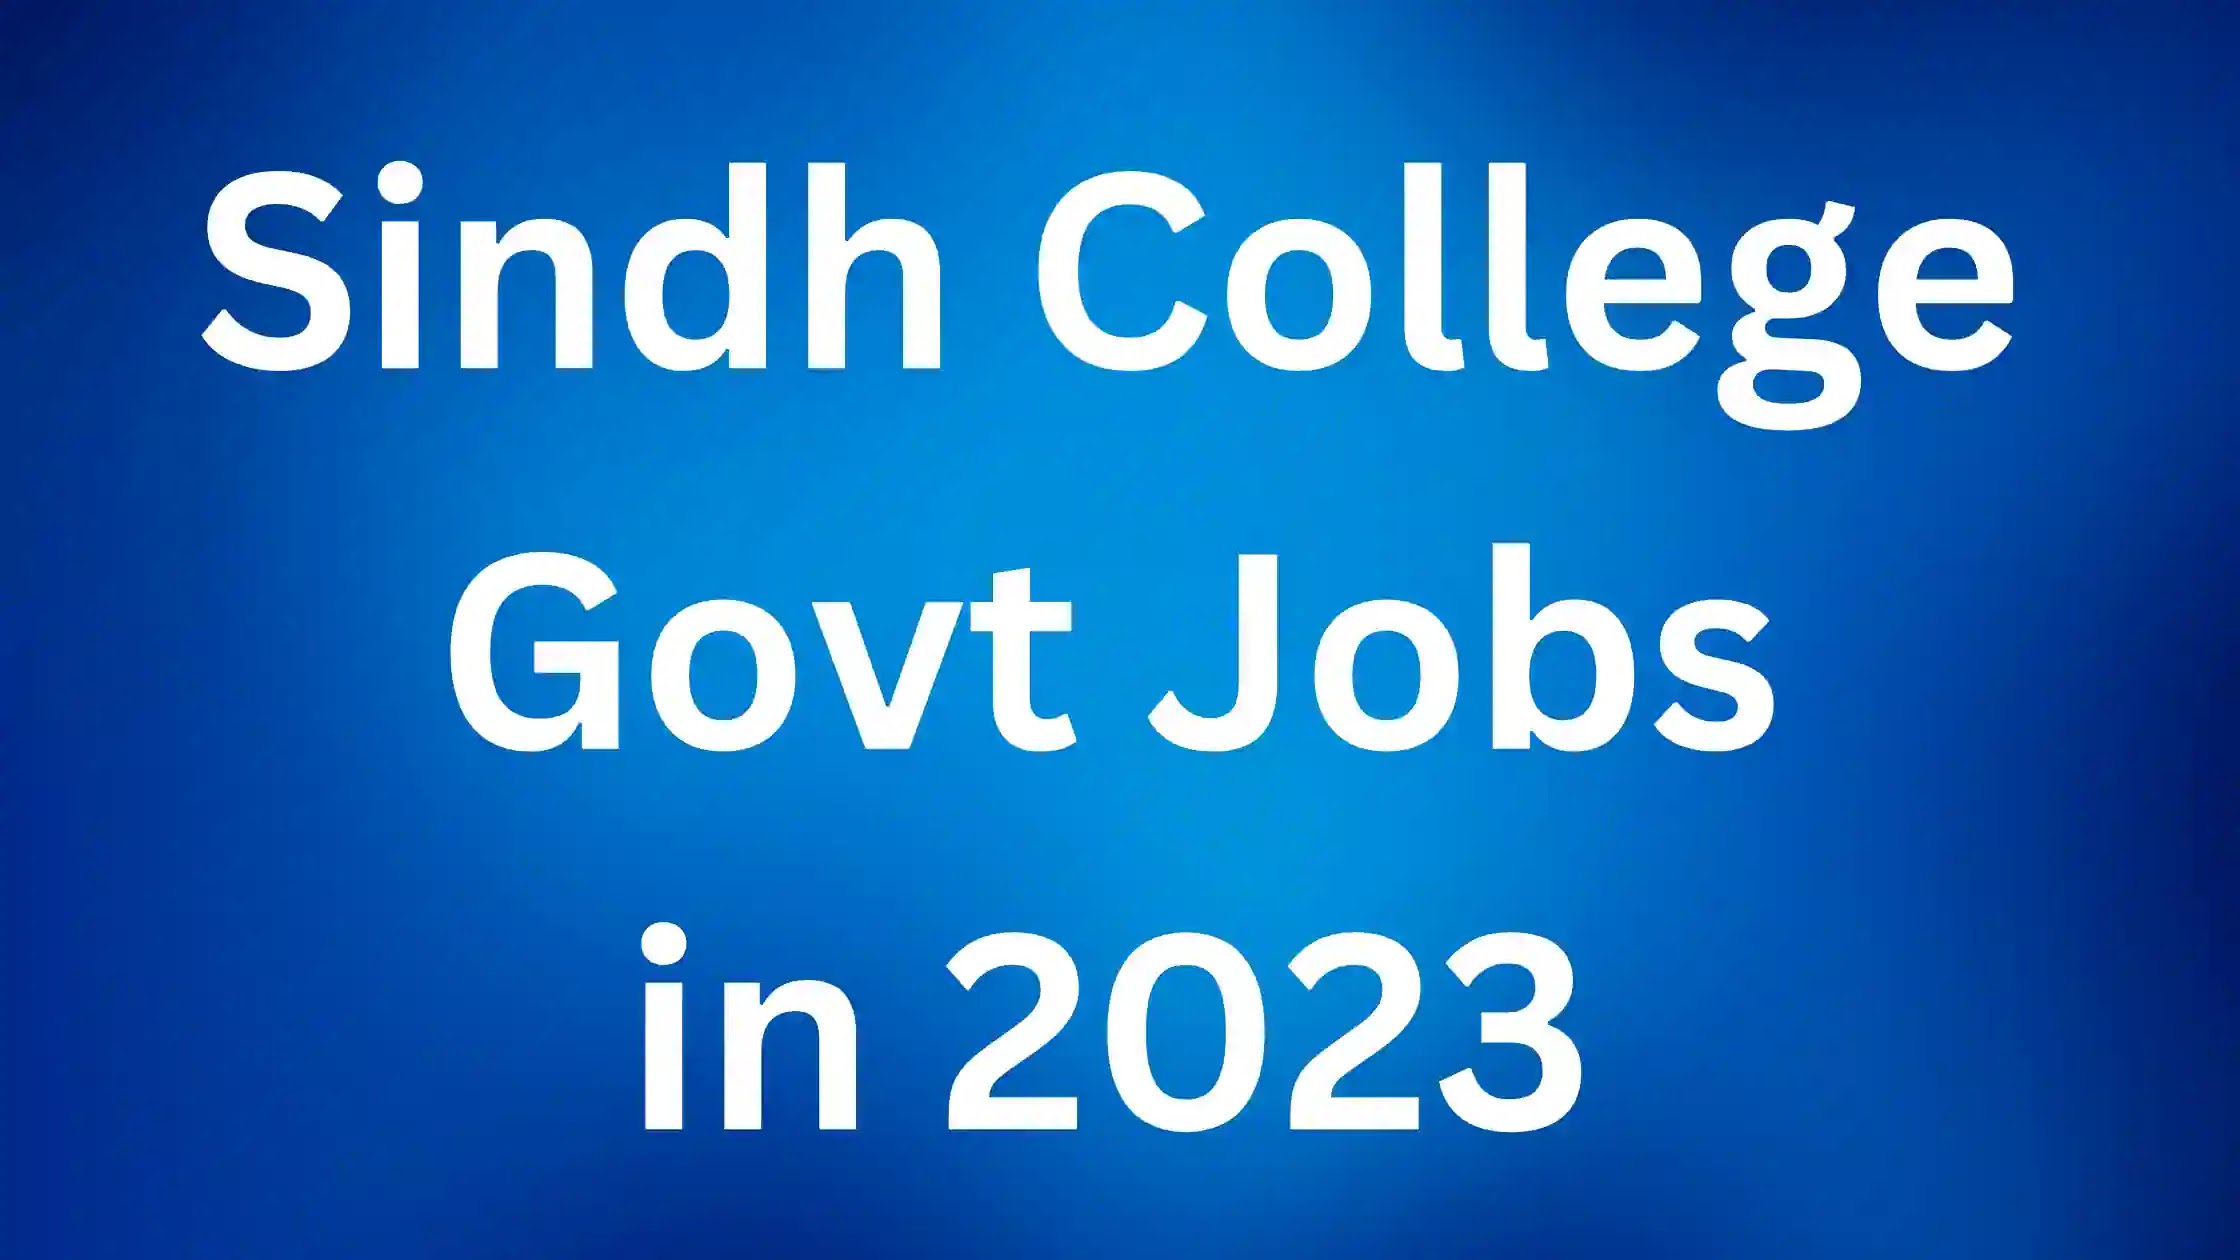 Sindh College Education Department Govt Jobs in Karachi in 2023